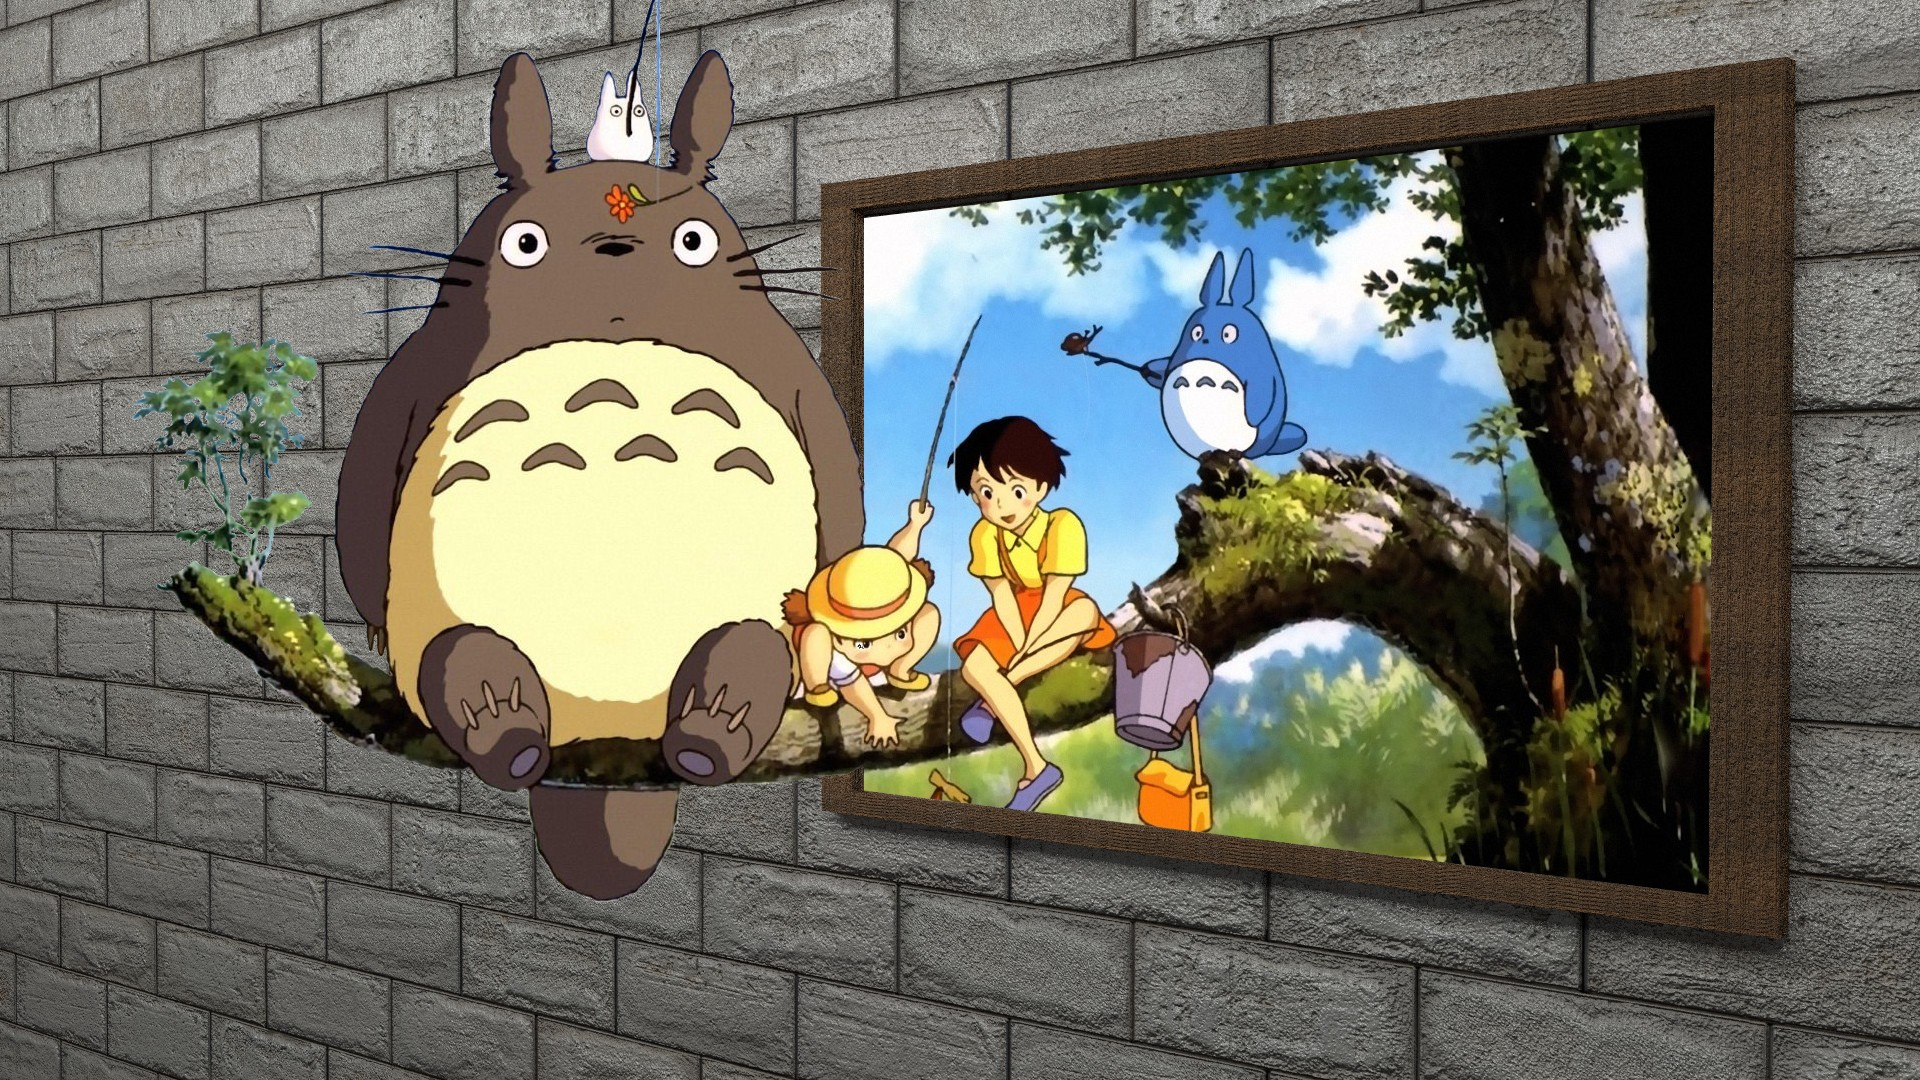 1920x1080 Wallpaper : wall, My Neighbor Totoro, mural, ART, screenshot Frozzenjogurt 35011 HD Wallpapers